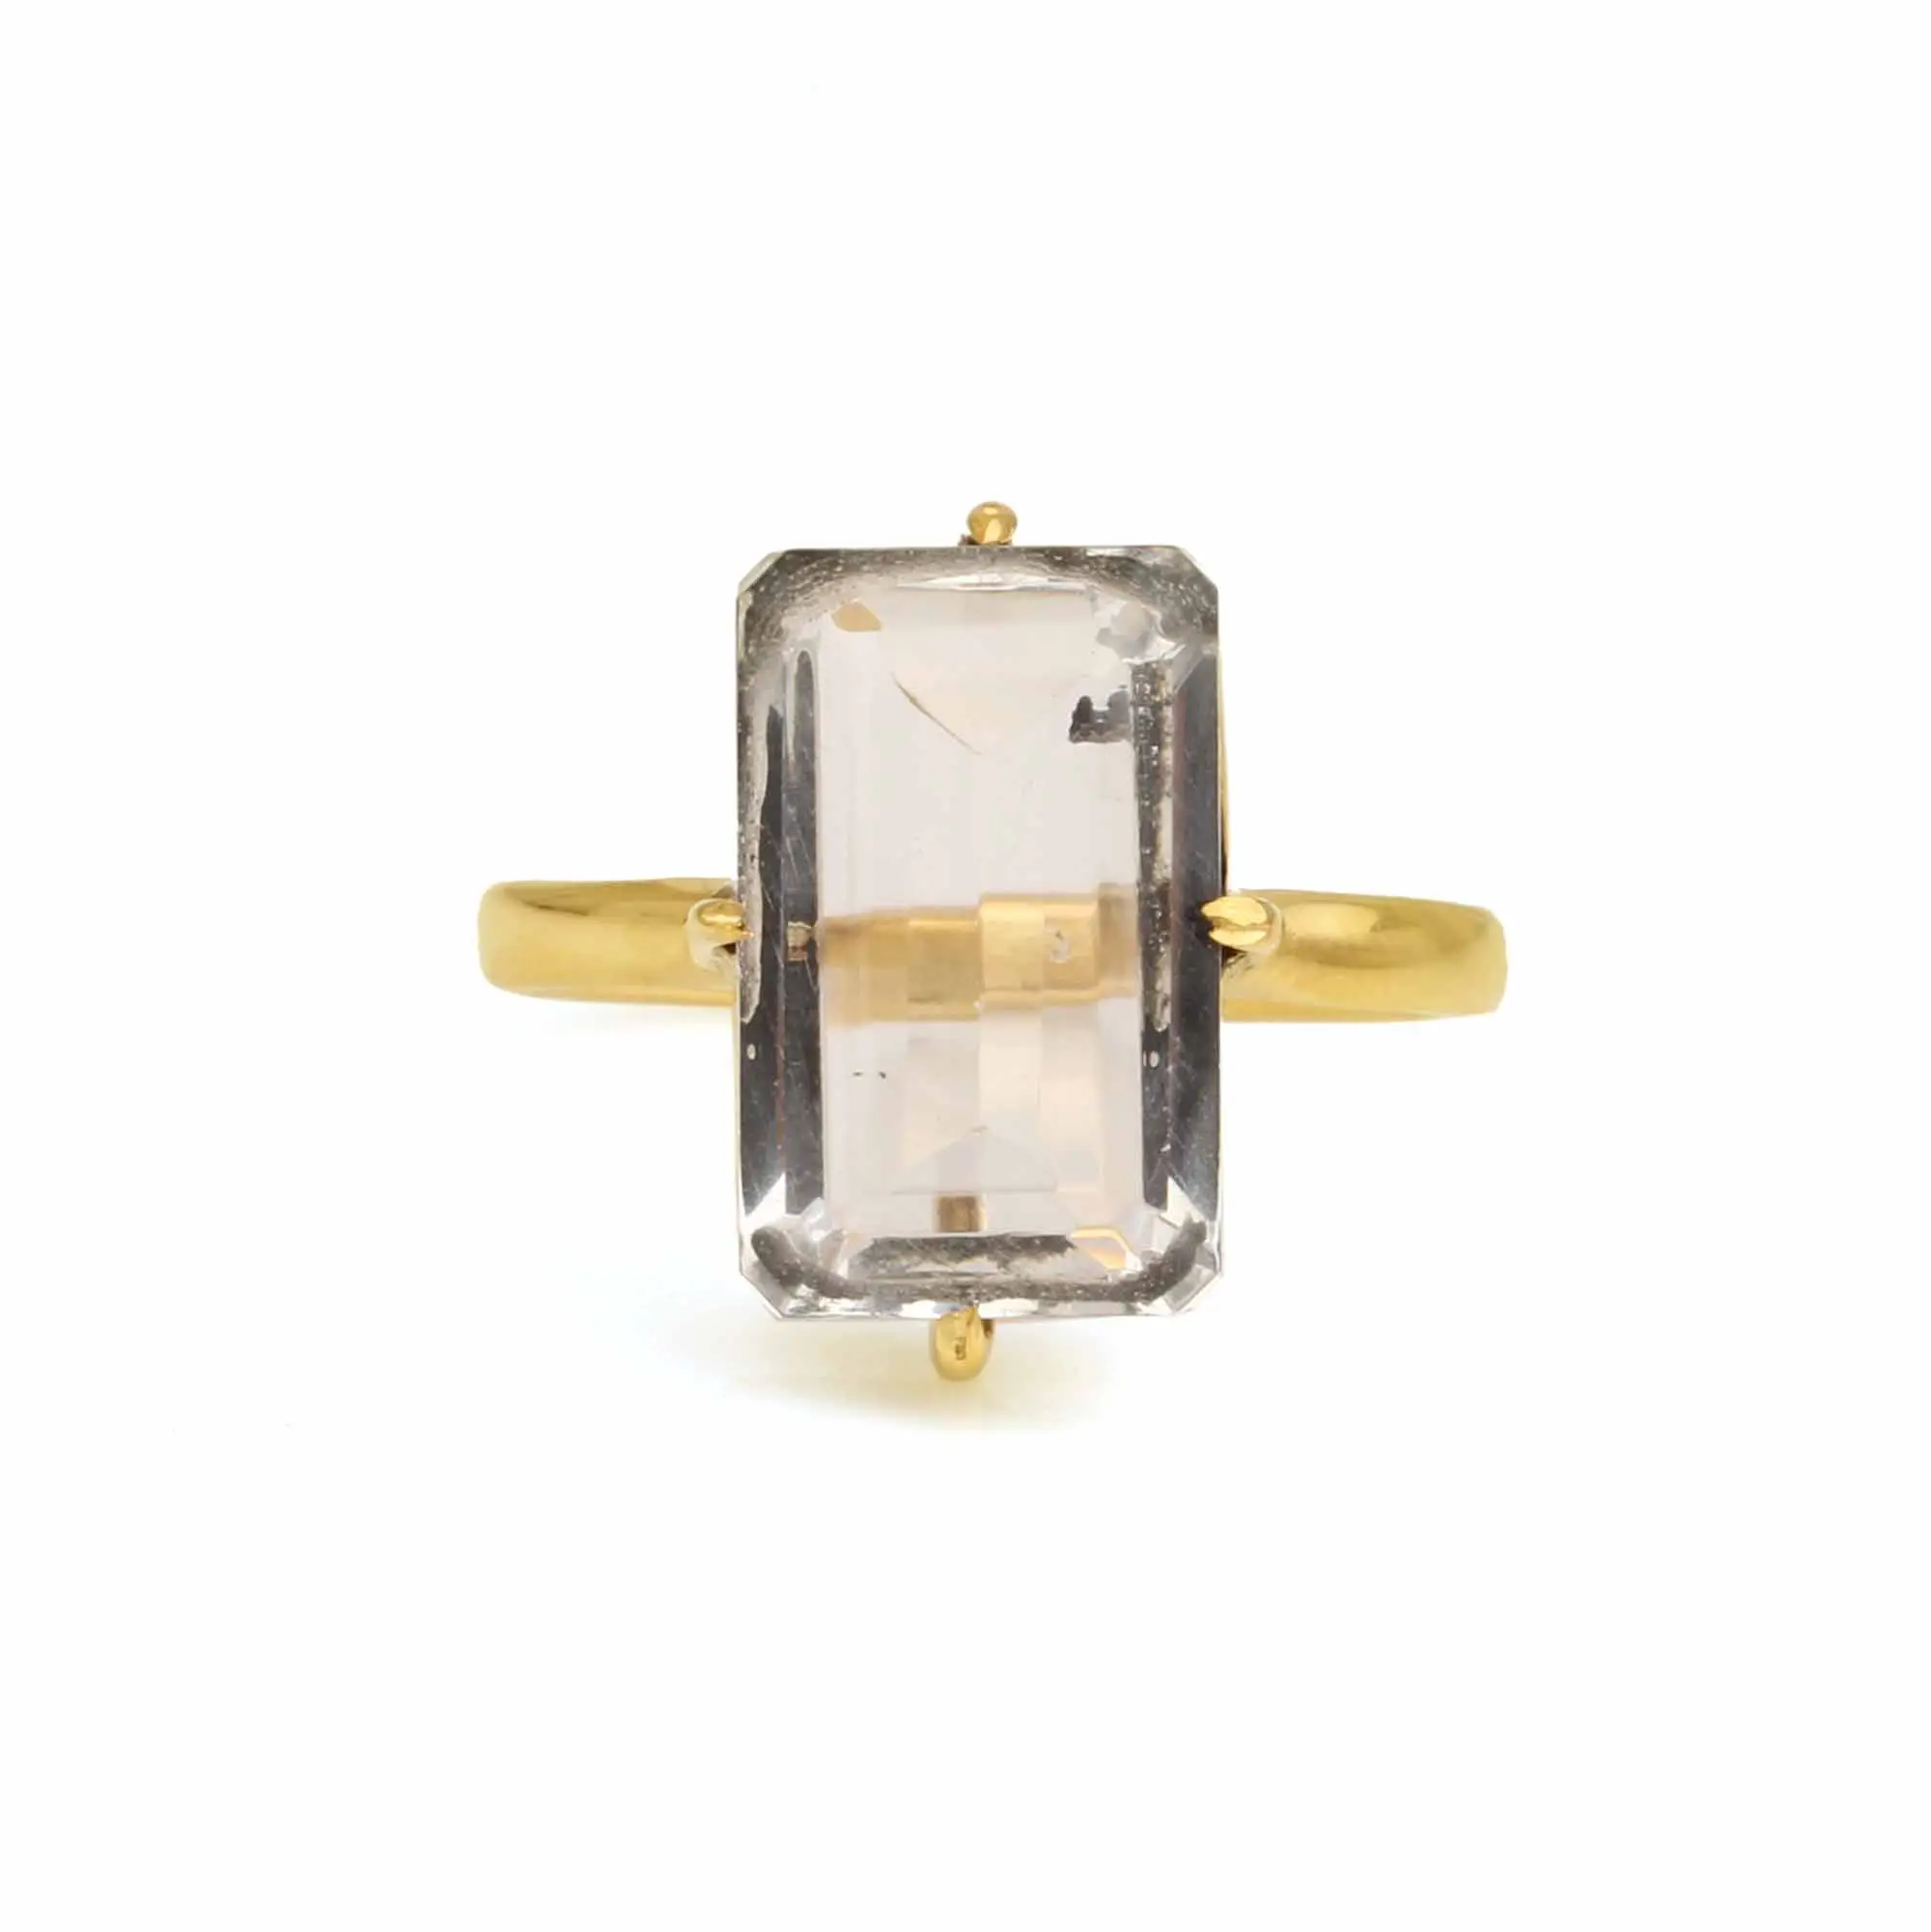 Natural clear quartz emerald cut gemstone sterling silver ring handmade design semi precious crystal quartz gold plated ring